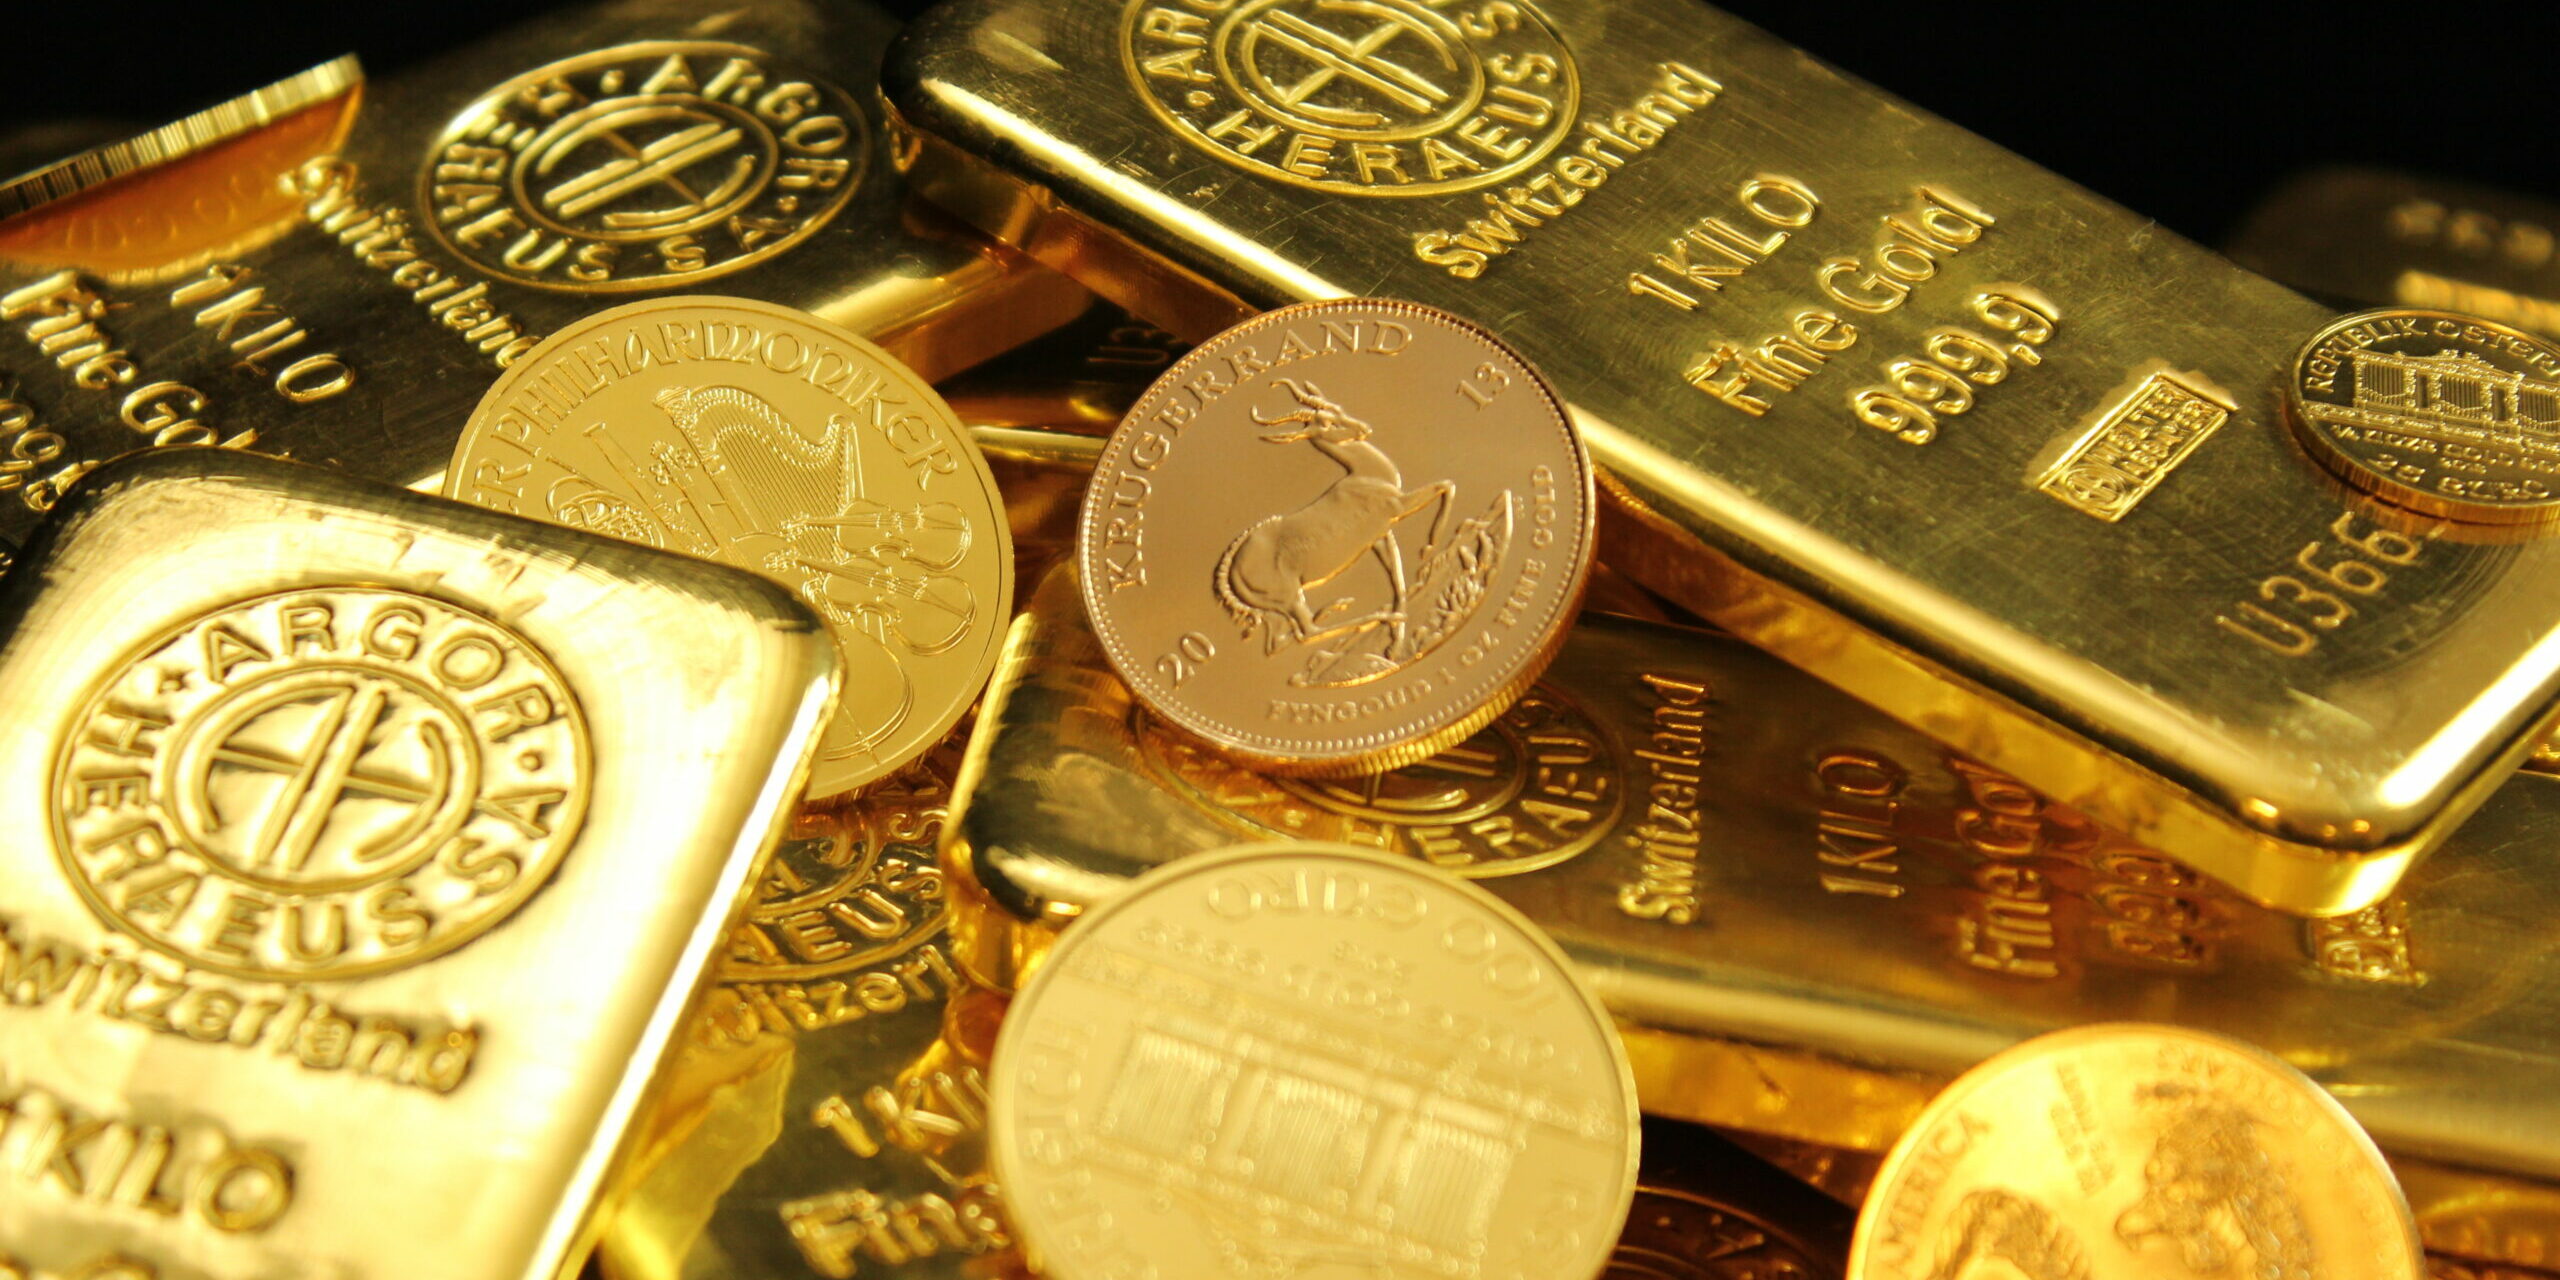 Precious Metals, Gold, Silver, Coins & Bars